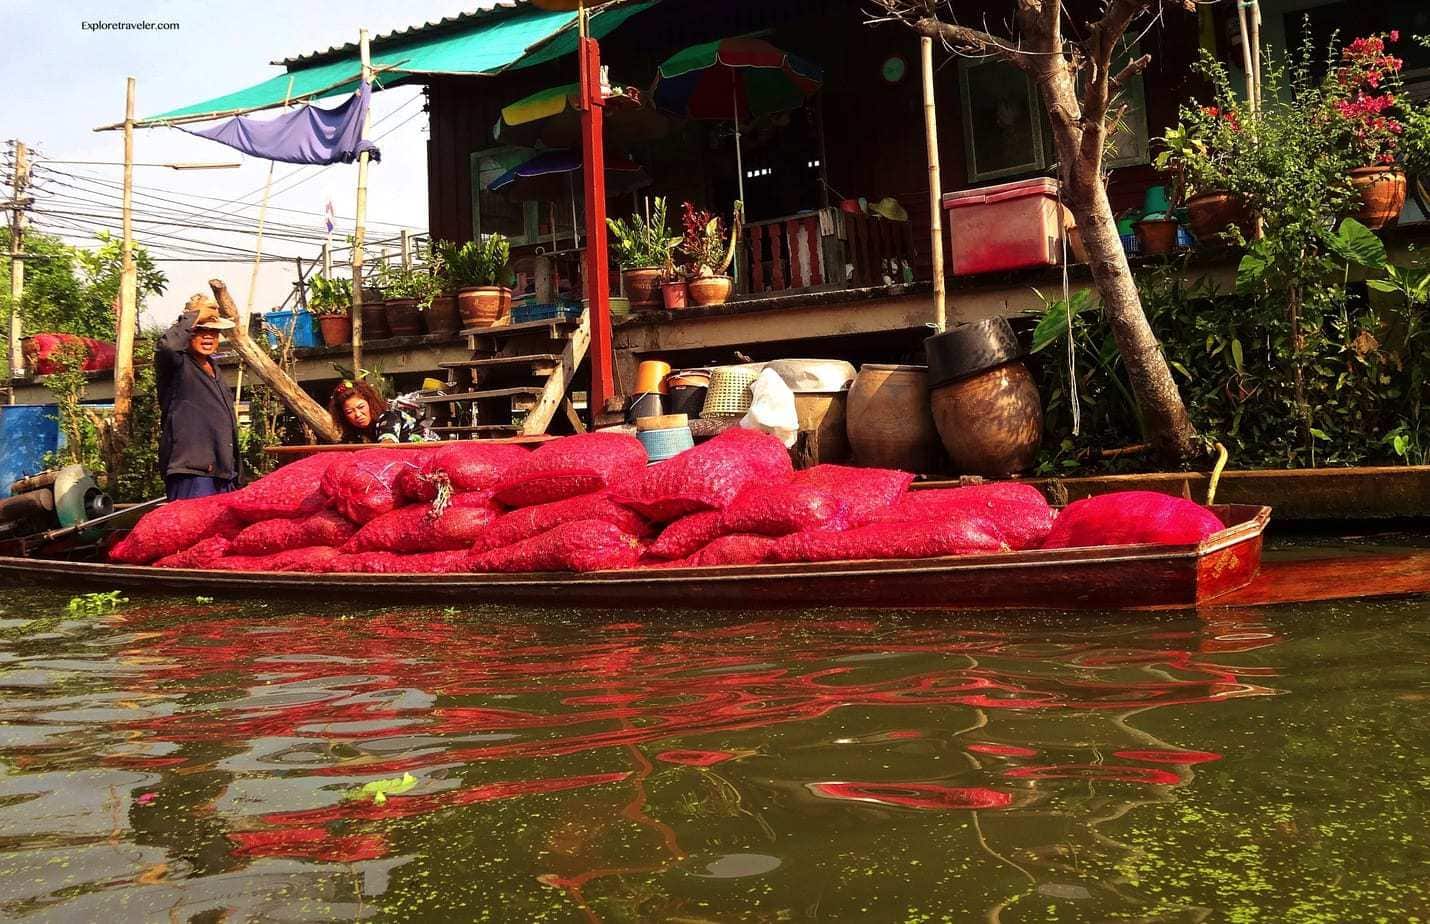 Transportation along the Damnoen Saduak Floating Market